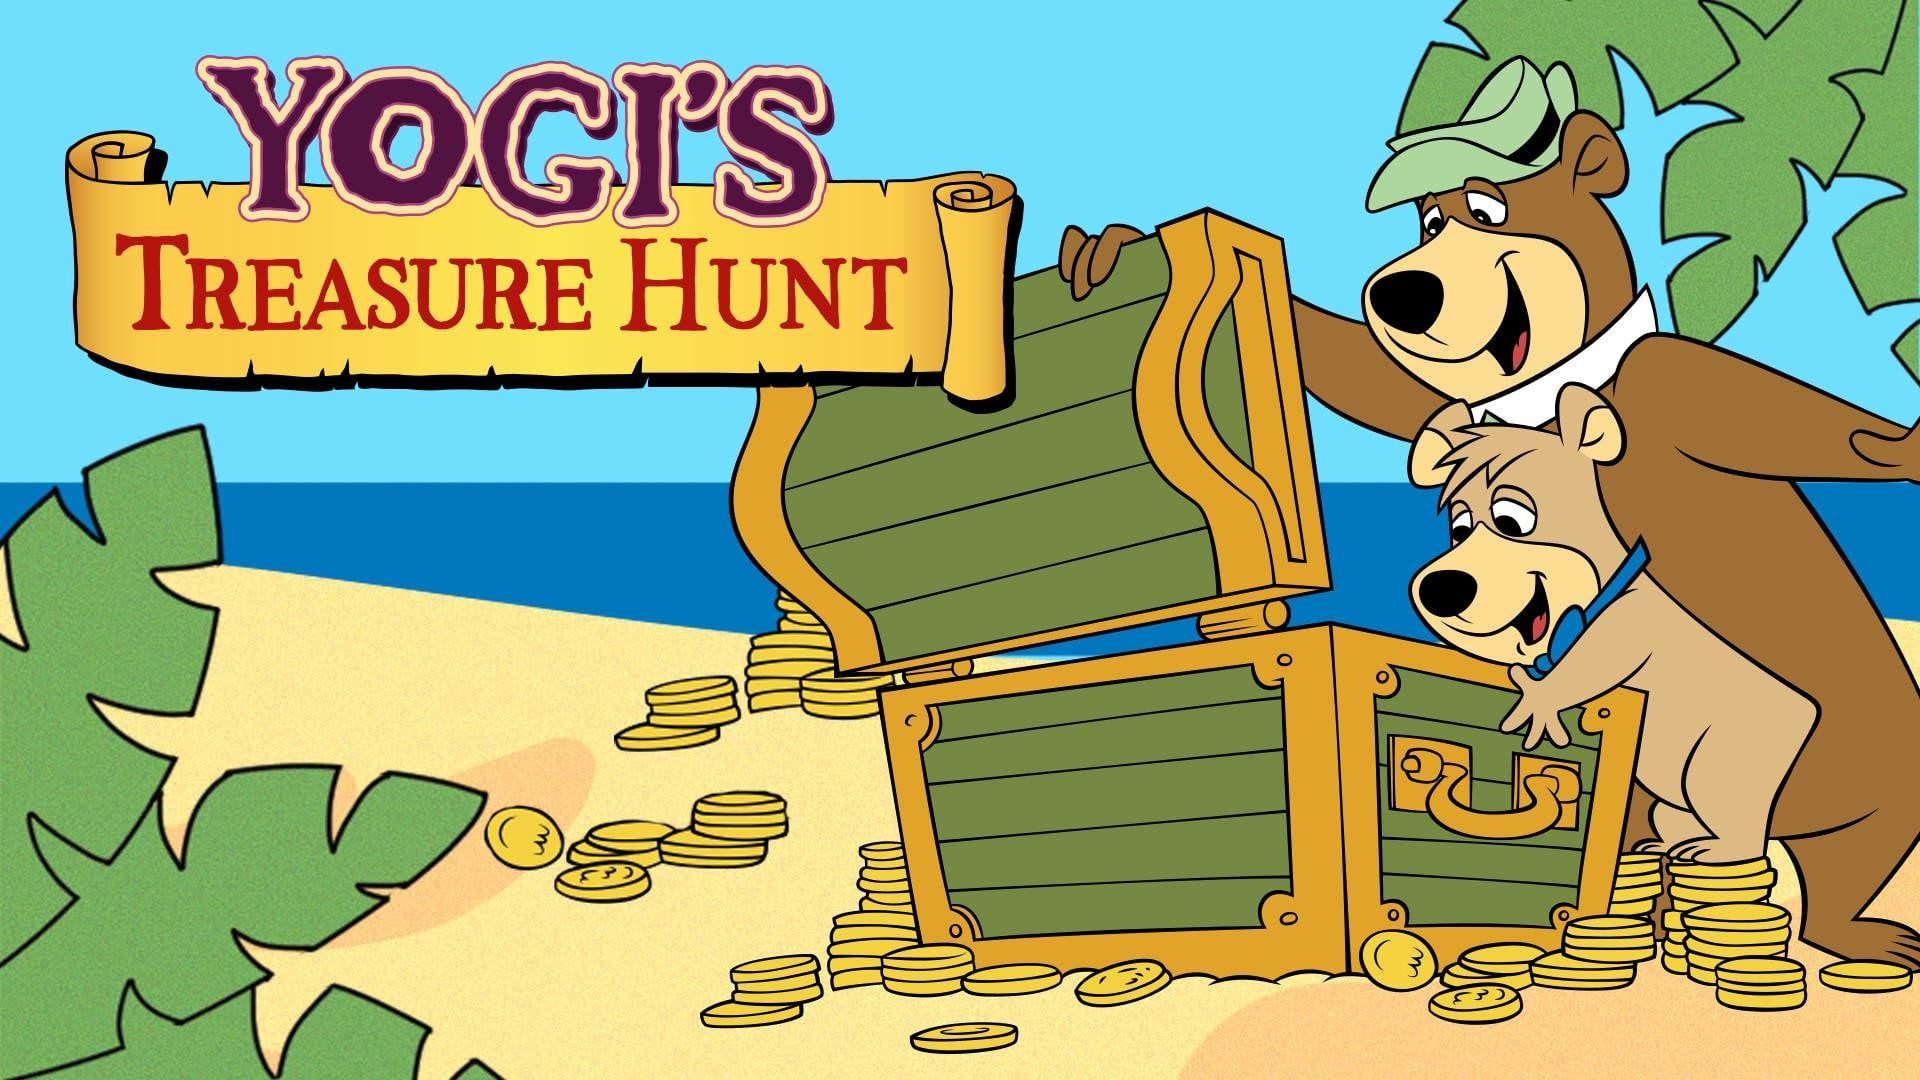 Yogi's Treasure Hunt background